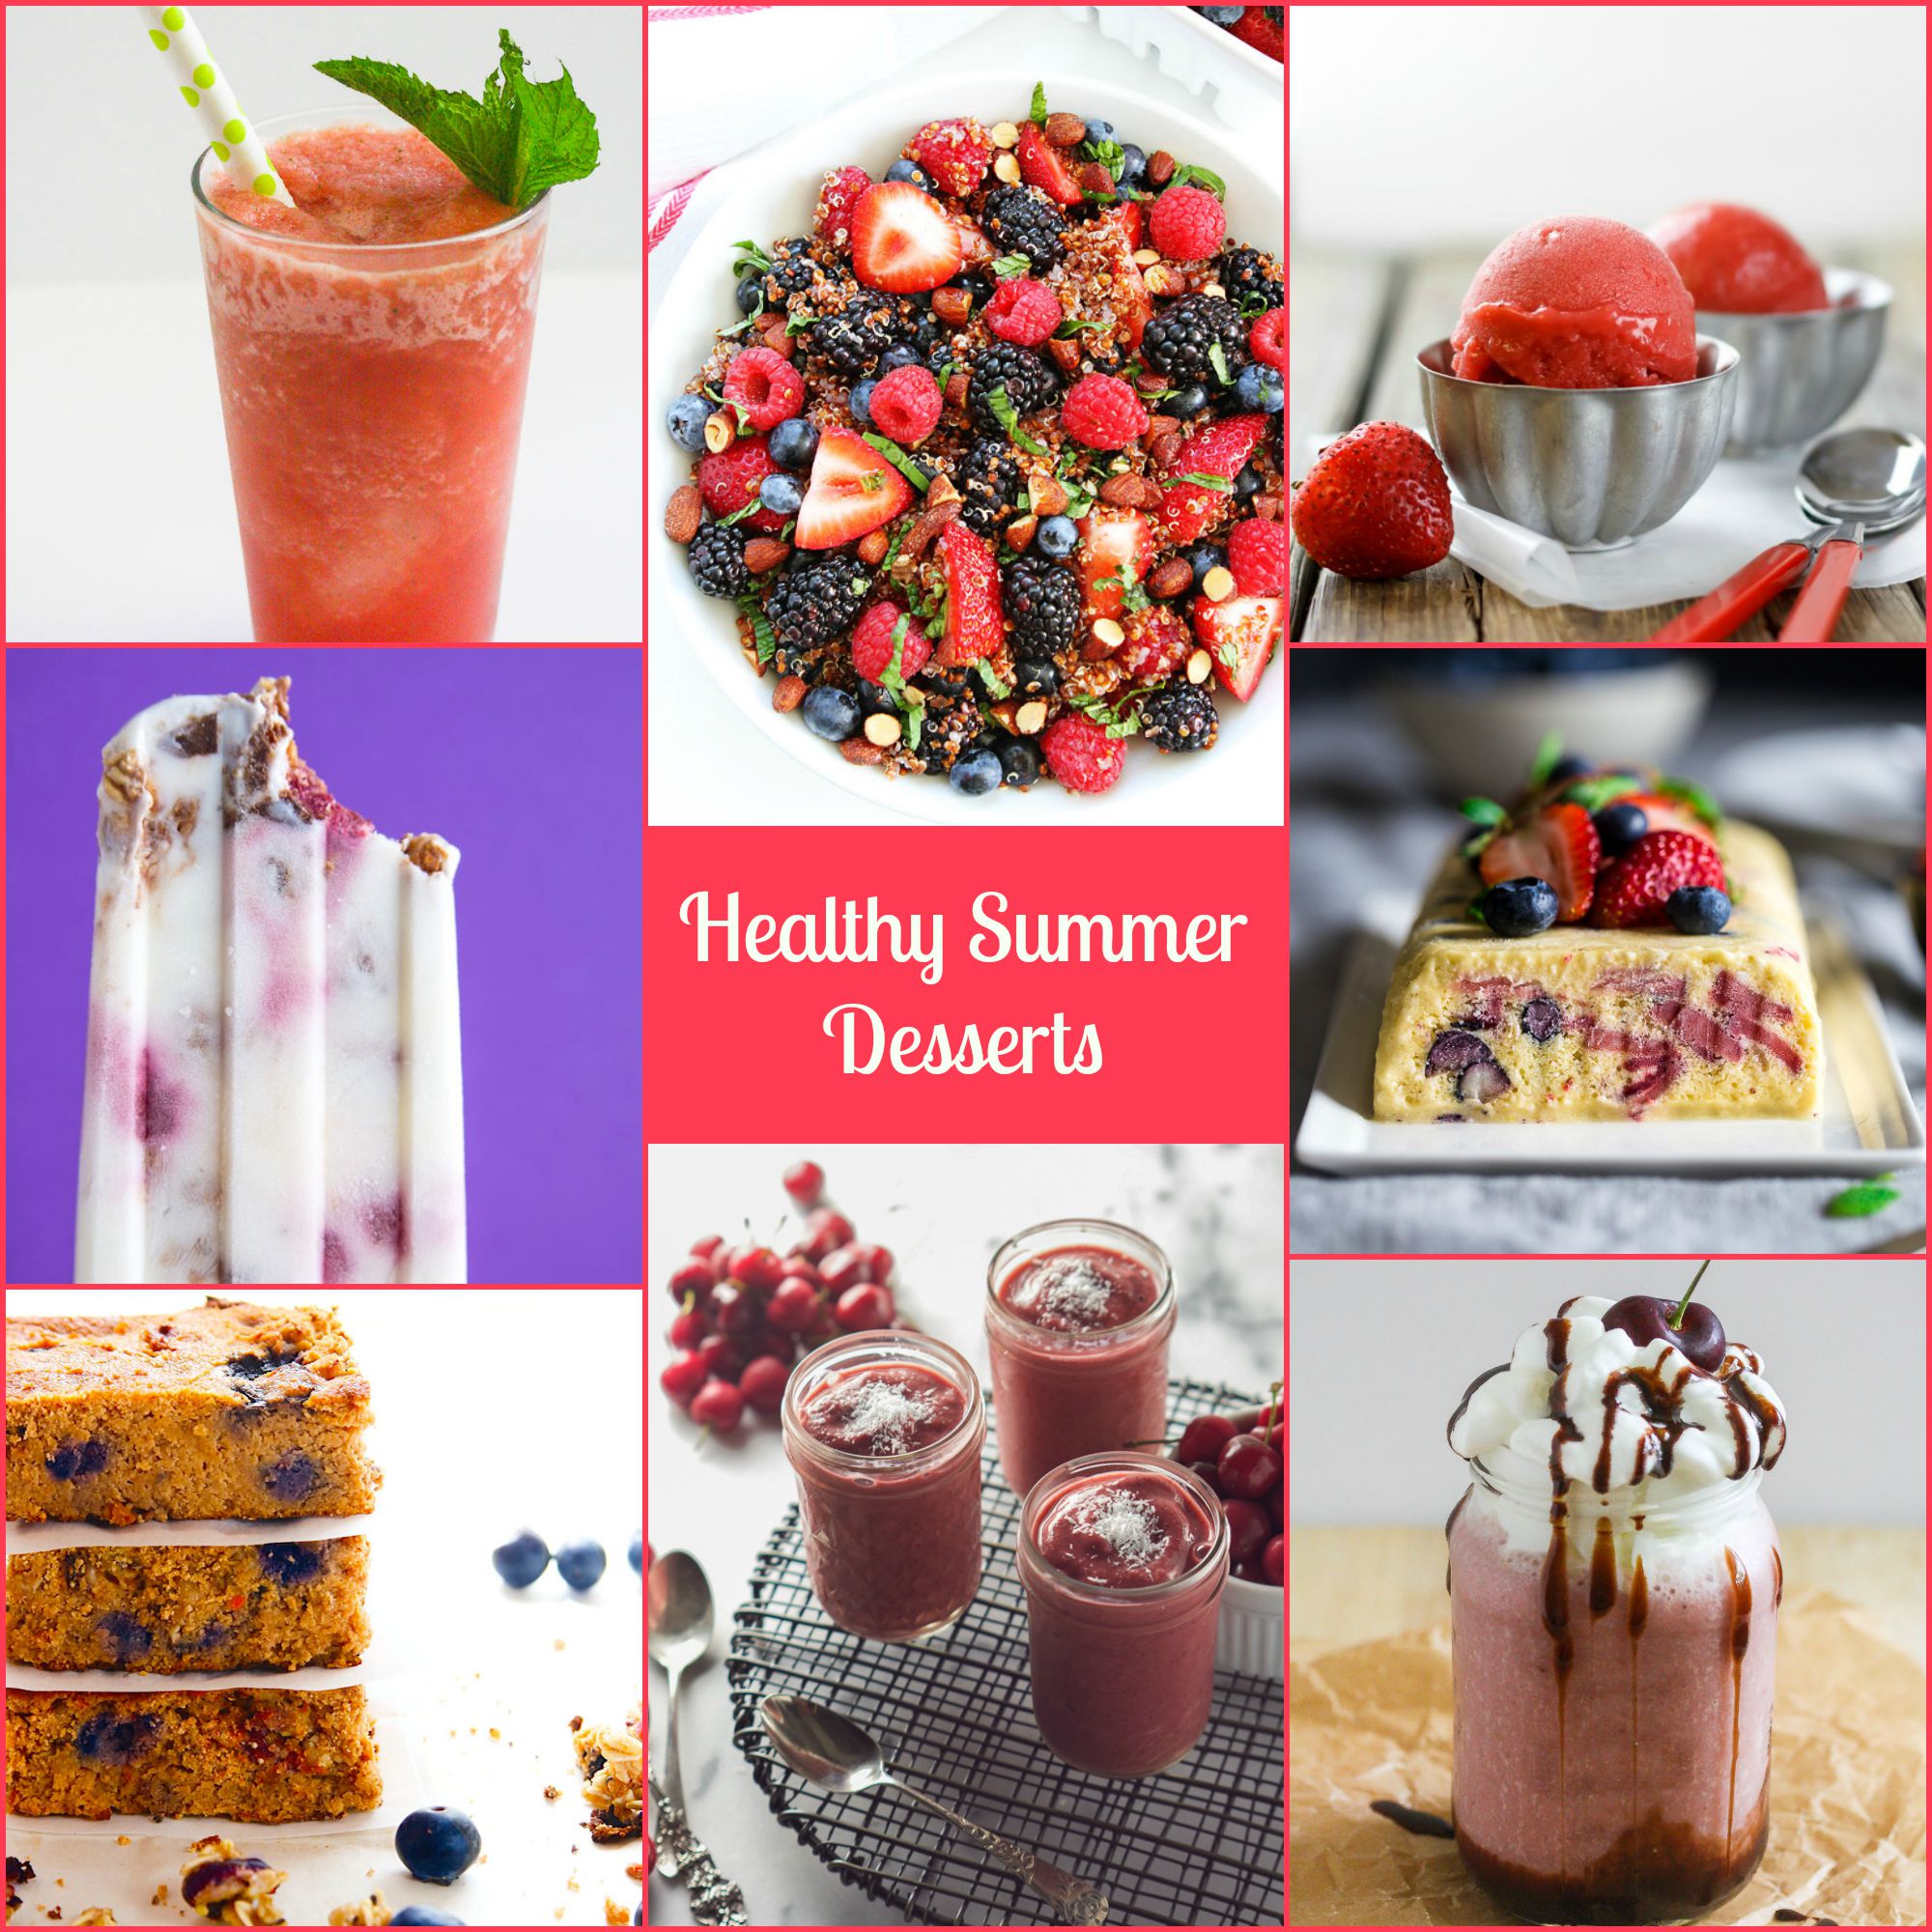 Healthy Summer Desserts from Lauren Kelly Nutrition